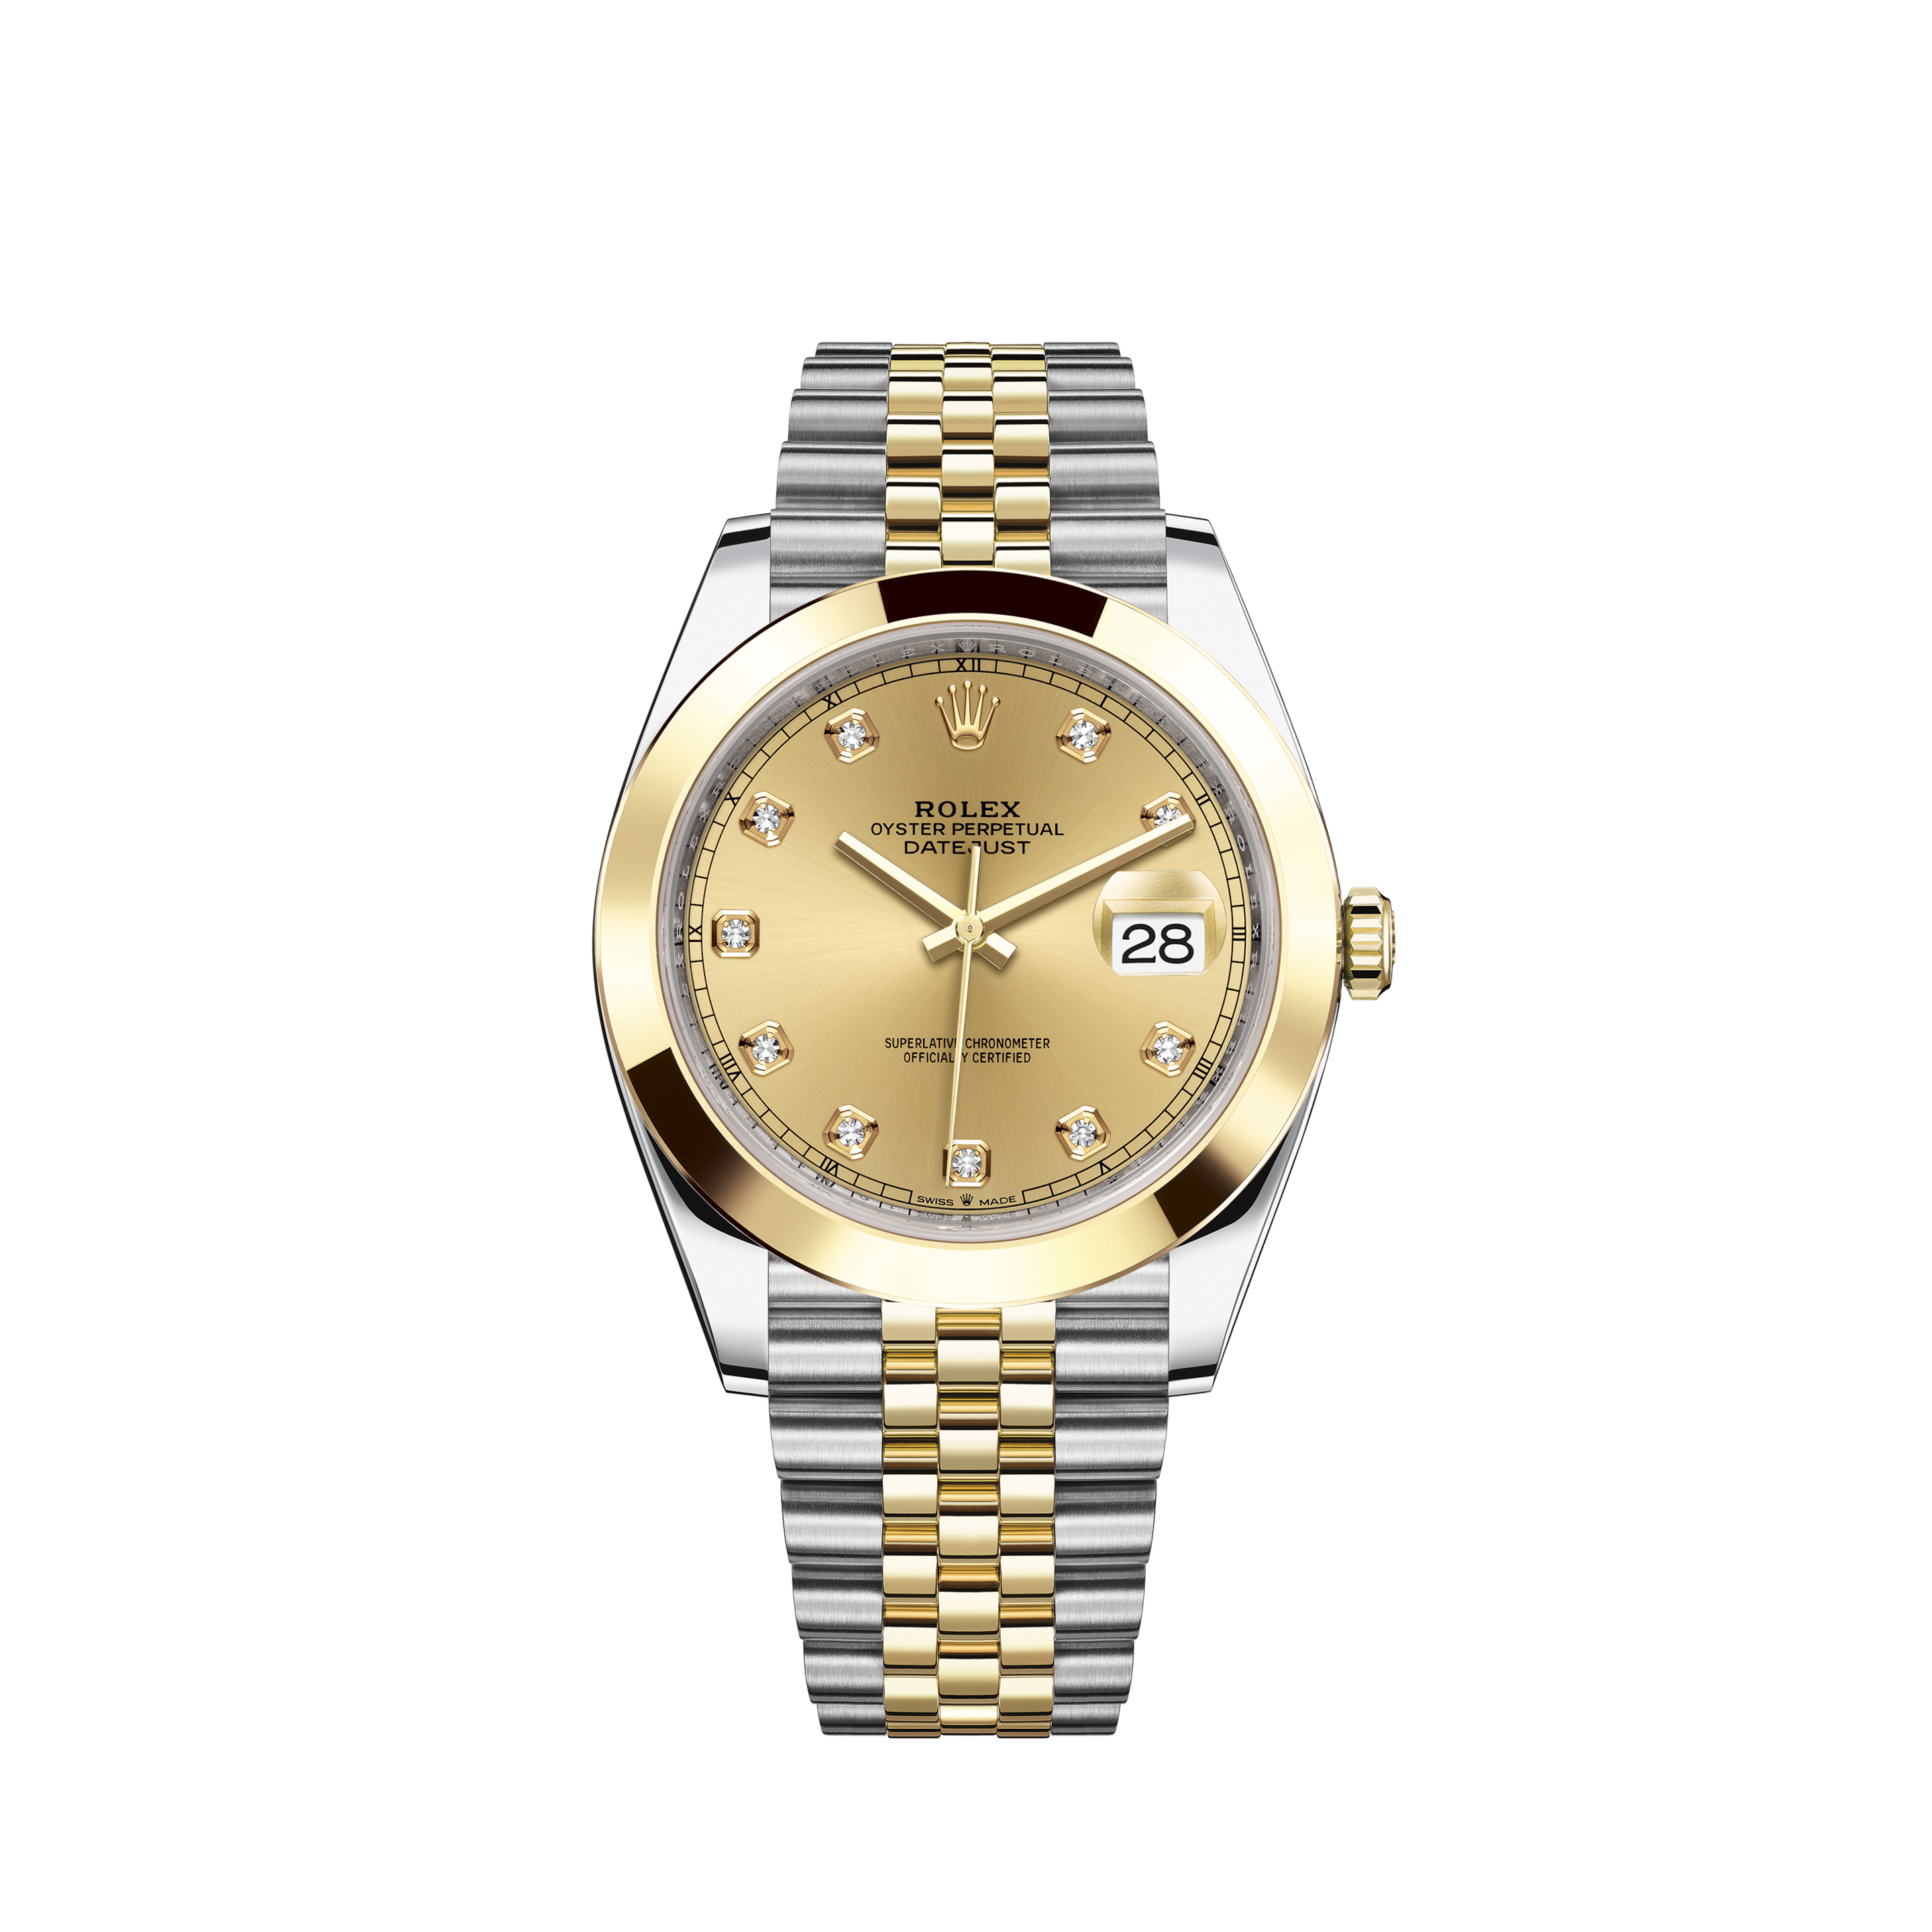 Rolex Datejust II 116300 3.25ct Diamond Bezel & Dial Automatic Watch